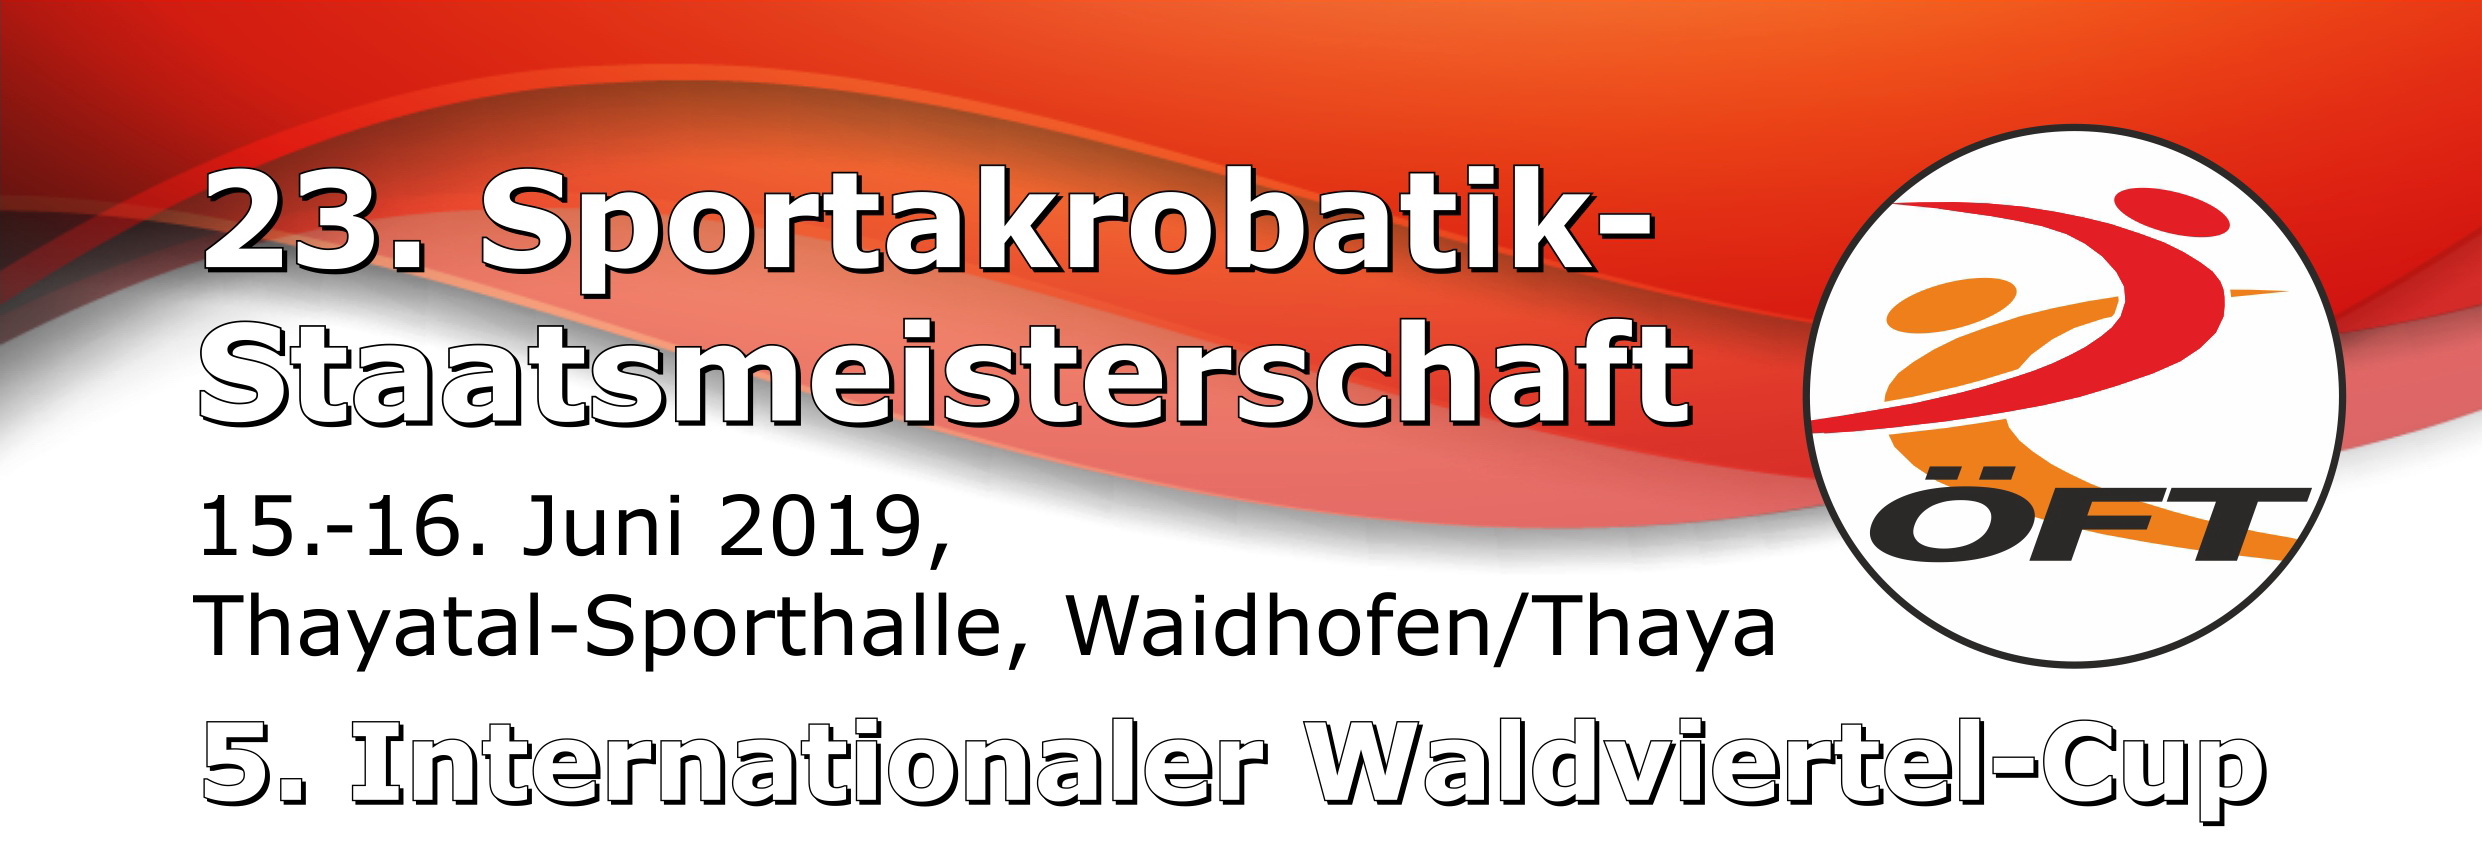 Staatsmeisterschaft Sportakrobatik 2019 - 5. Internationaler Waldviertel-Cup